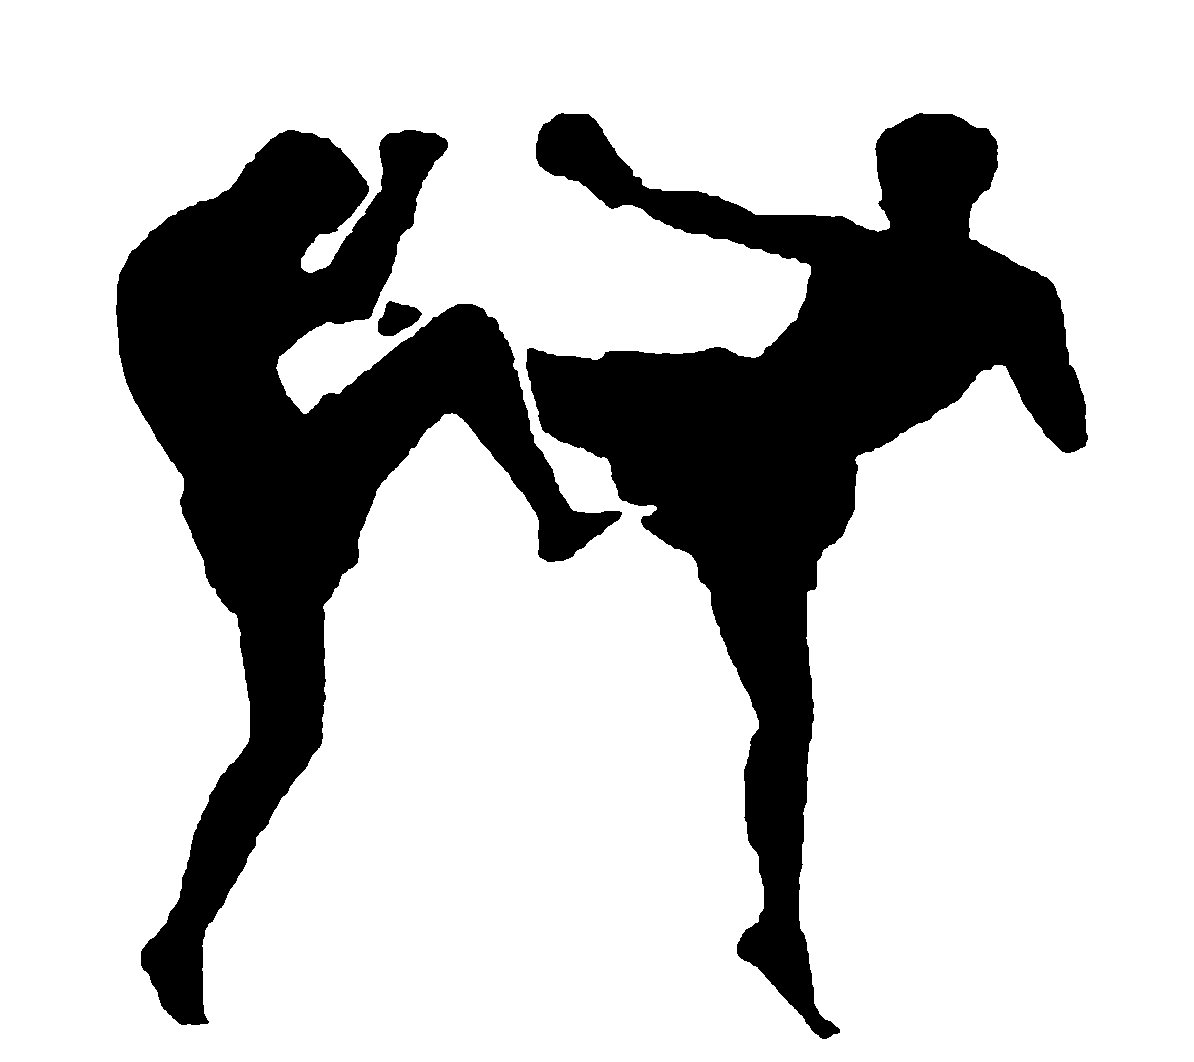 Kick,Athletic dance move,Kickboxing,Muay thai,Strike,Sports,Karate,Contact sport,Silhouette,Individual sports,Capoeira,Taekwondo,Dancer